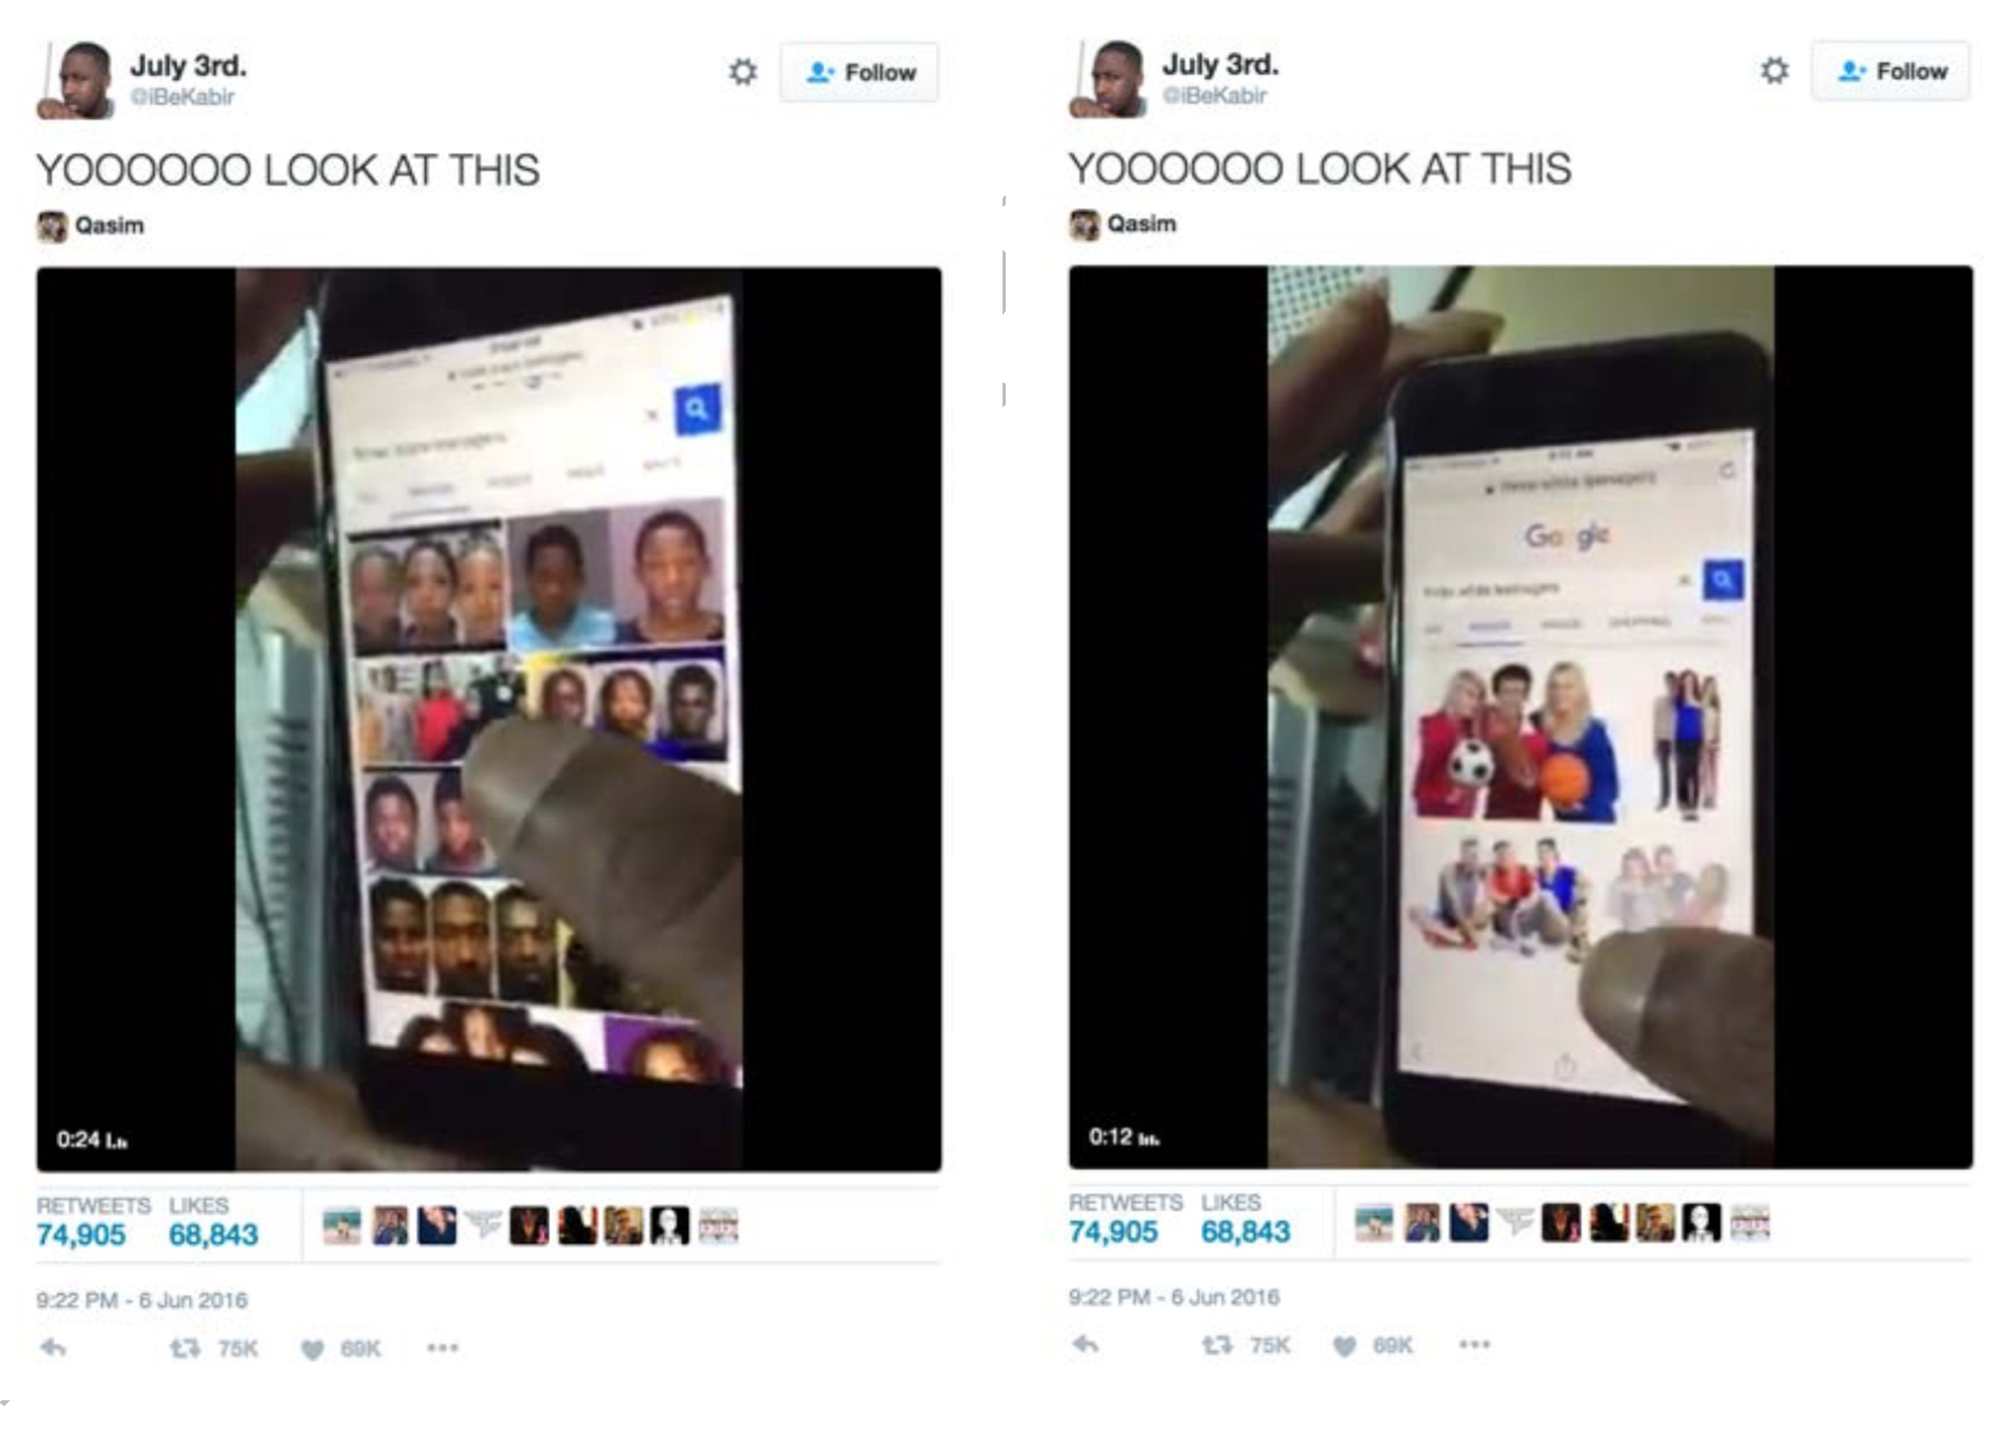 Kabir Ali’s tweet about his searching for “three black teenagers” shows mug shots.